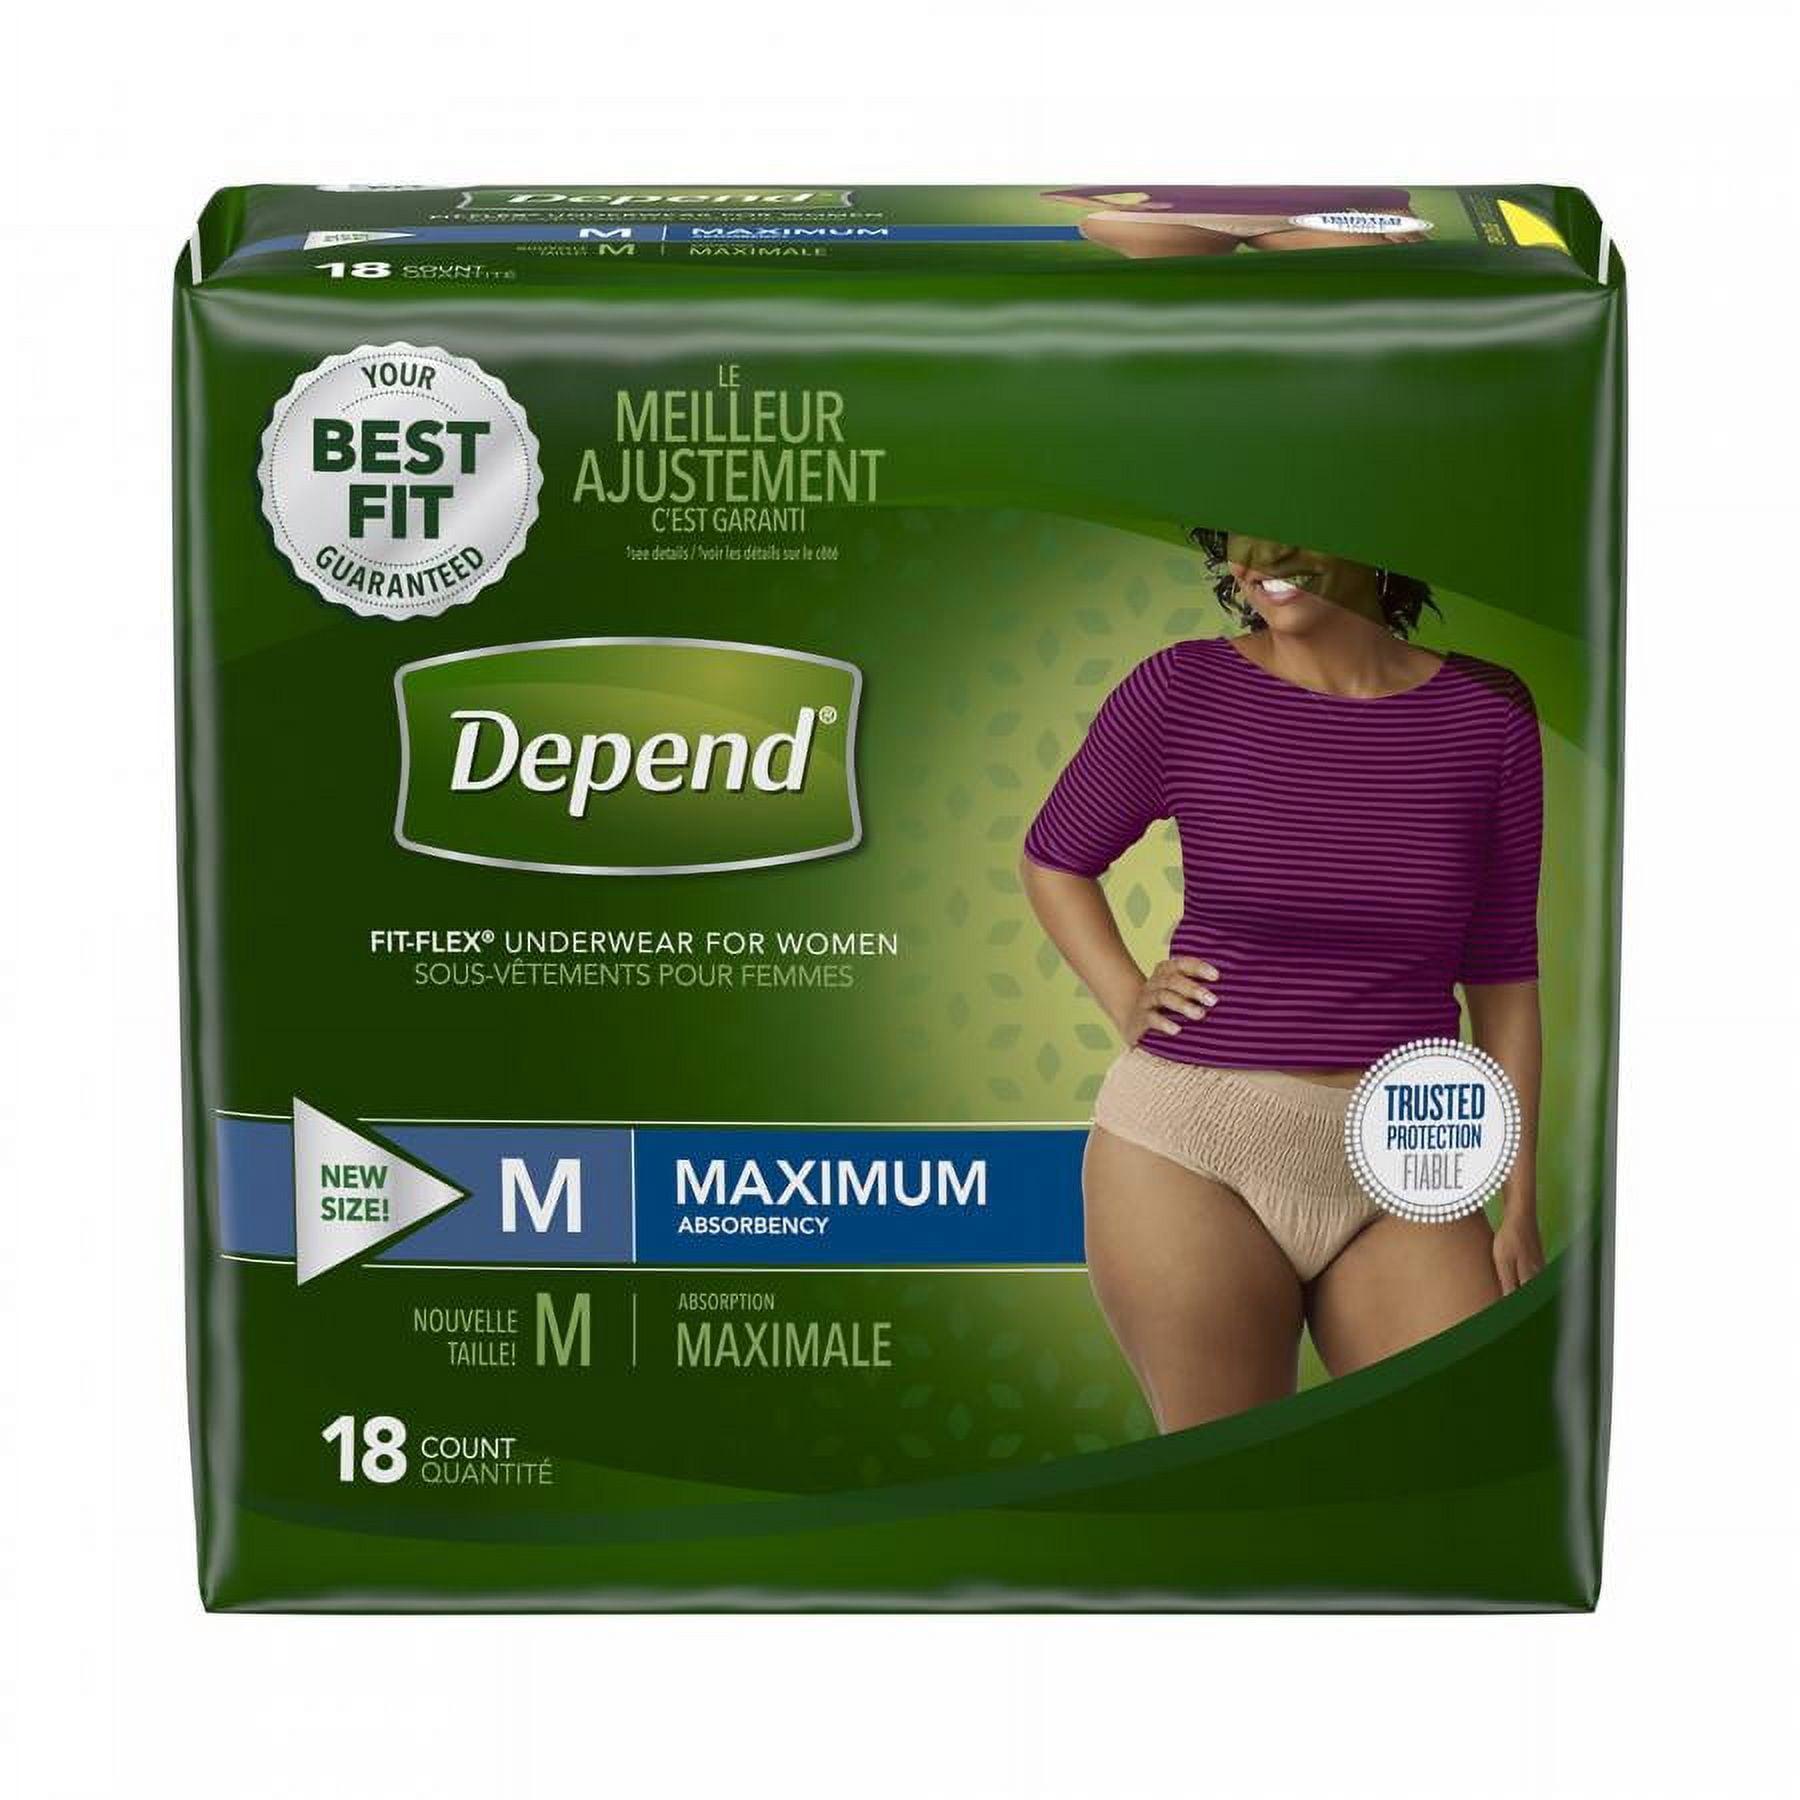 Depend FIT-FLEX Underwear for Women, Maximum Absorbency, Medium, 36 Count